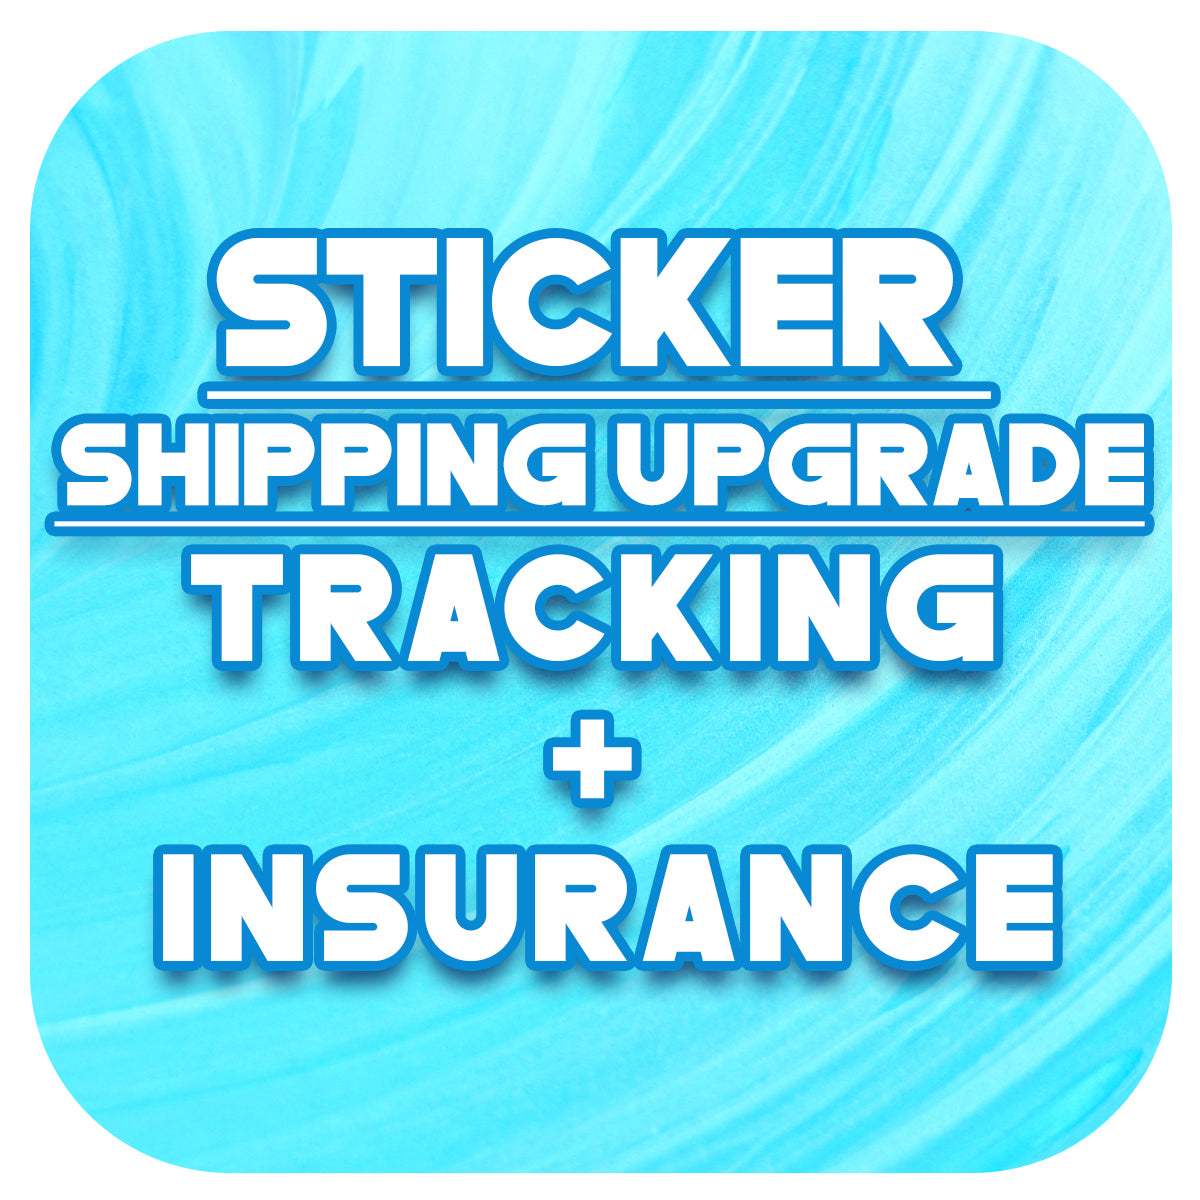 Sticker shipping upgrade: Tracking + Insurance